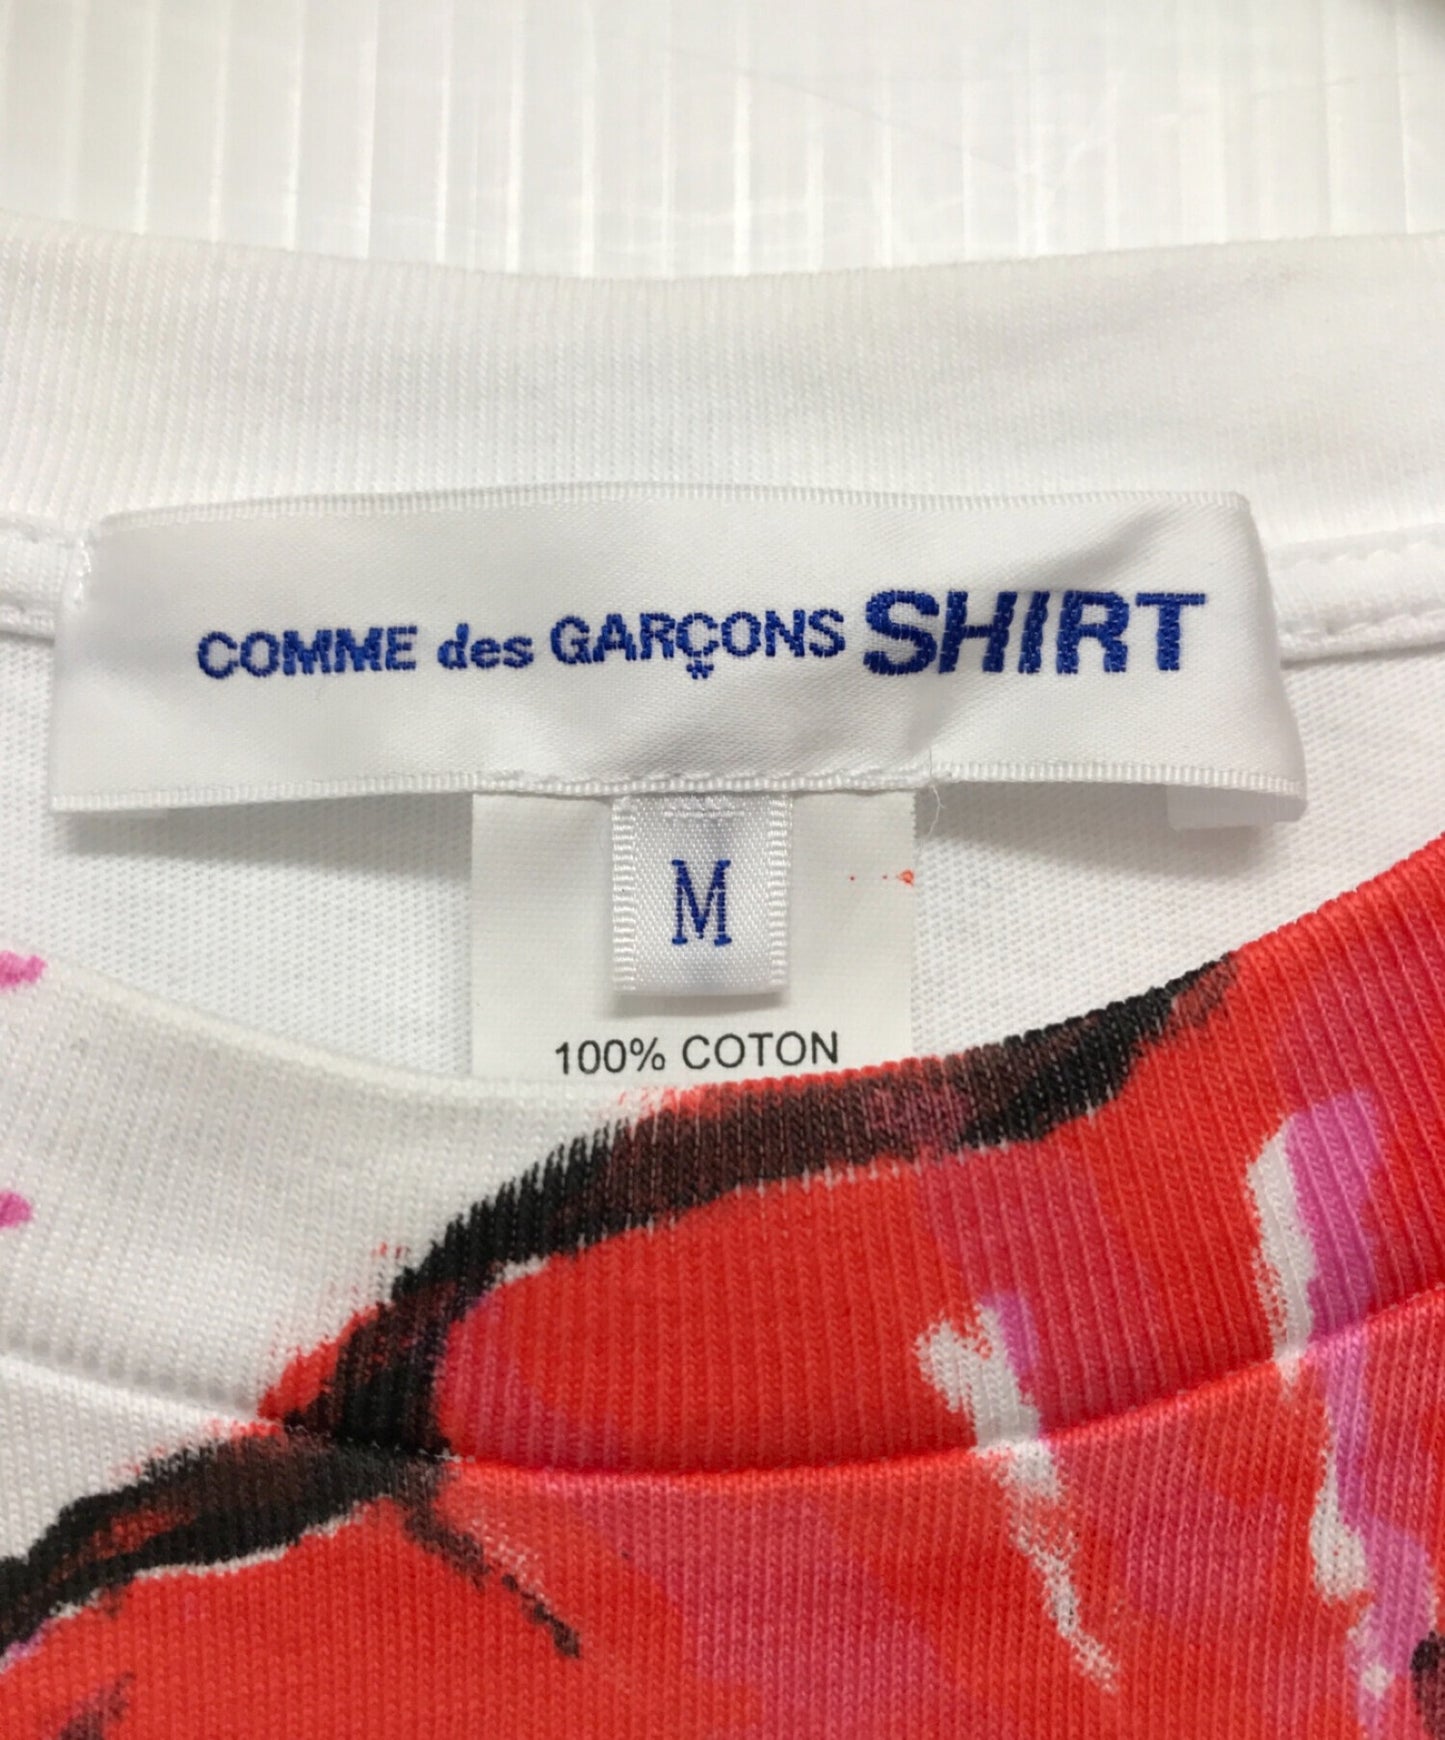 Comme des Garcons 셔츠 Romain Eugene 티셔츠 / 컷 및 바느질 / 짧은 슬리브 티셔츠 / s / s 컷 및 꿰매기 / 인쇄 된 컷 및 꿰매어 EG-T100